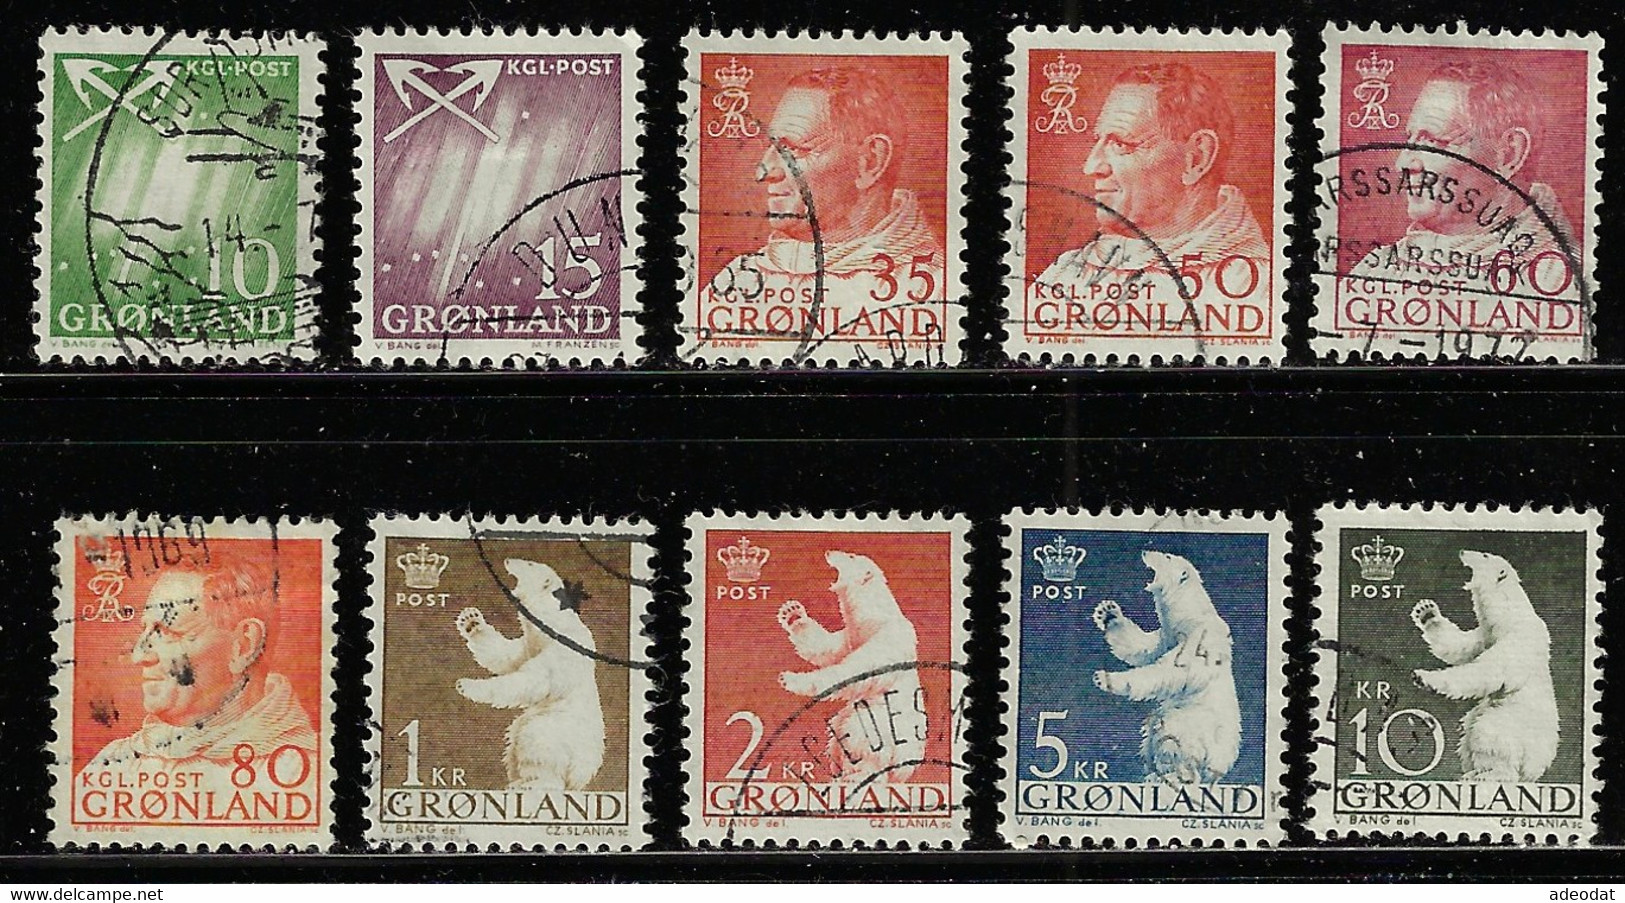 GREENLAND 1963-68 SCOTT 50,52,56,59-63 USED - Usados